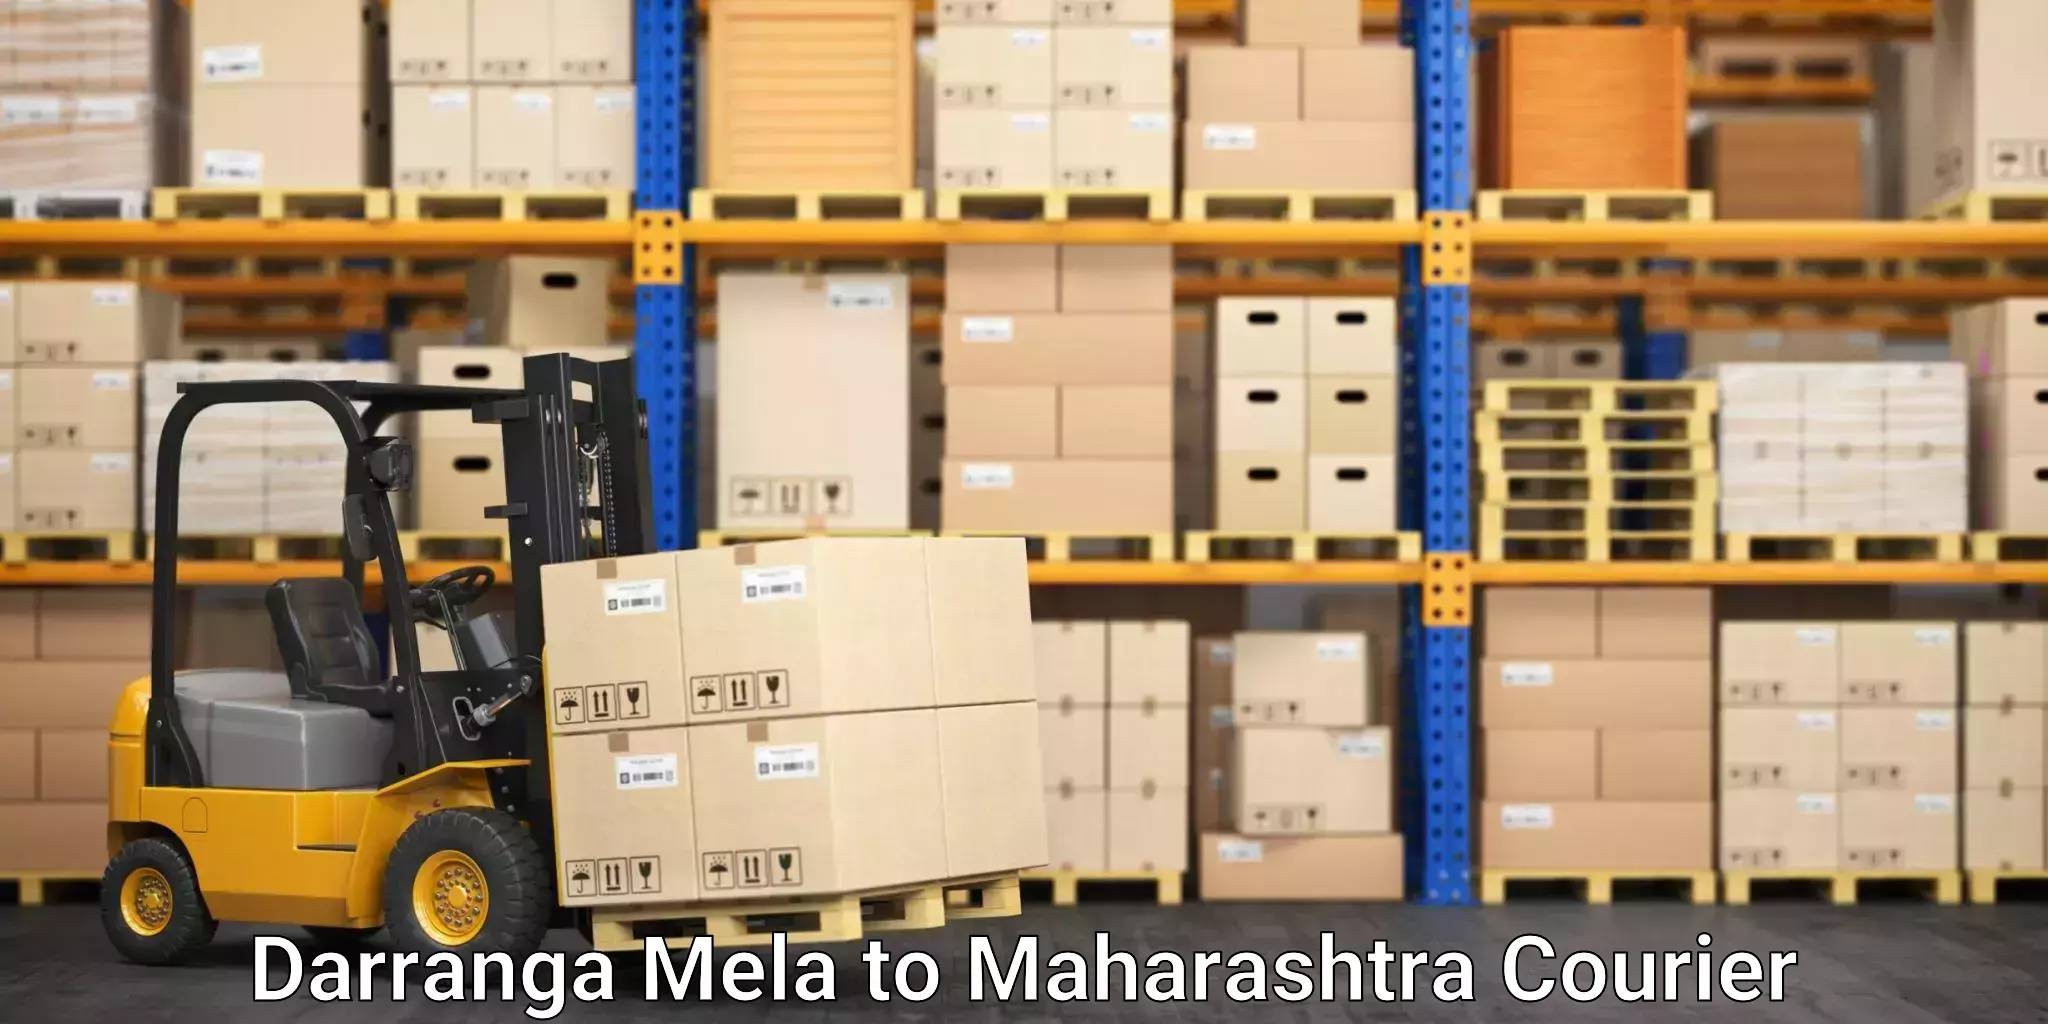 High-performance logistics Darranga Mela to Daryapur